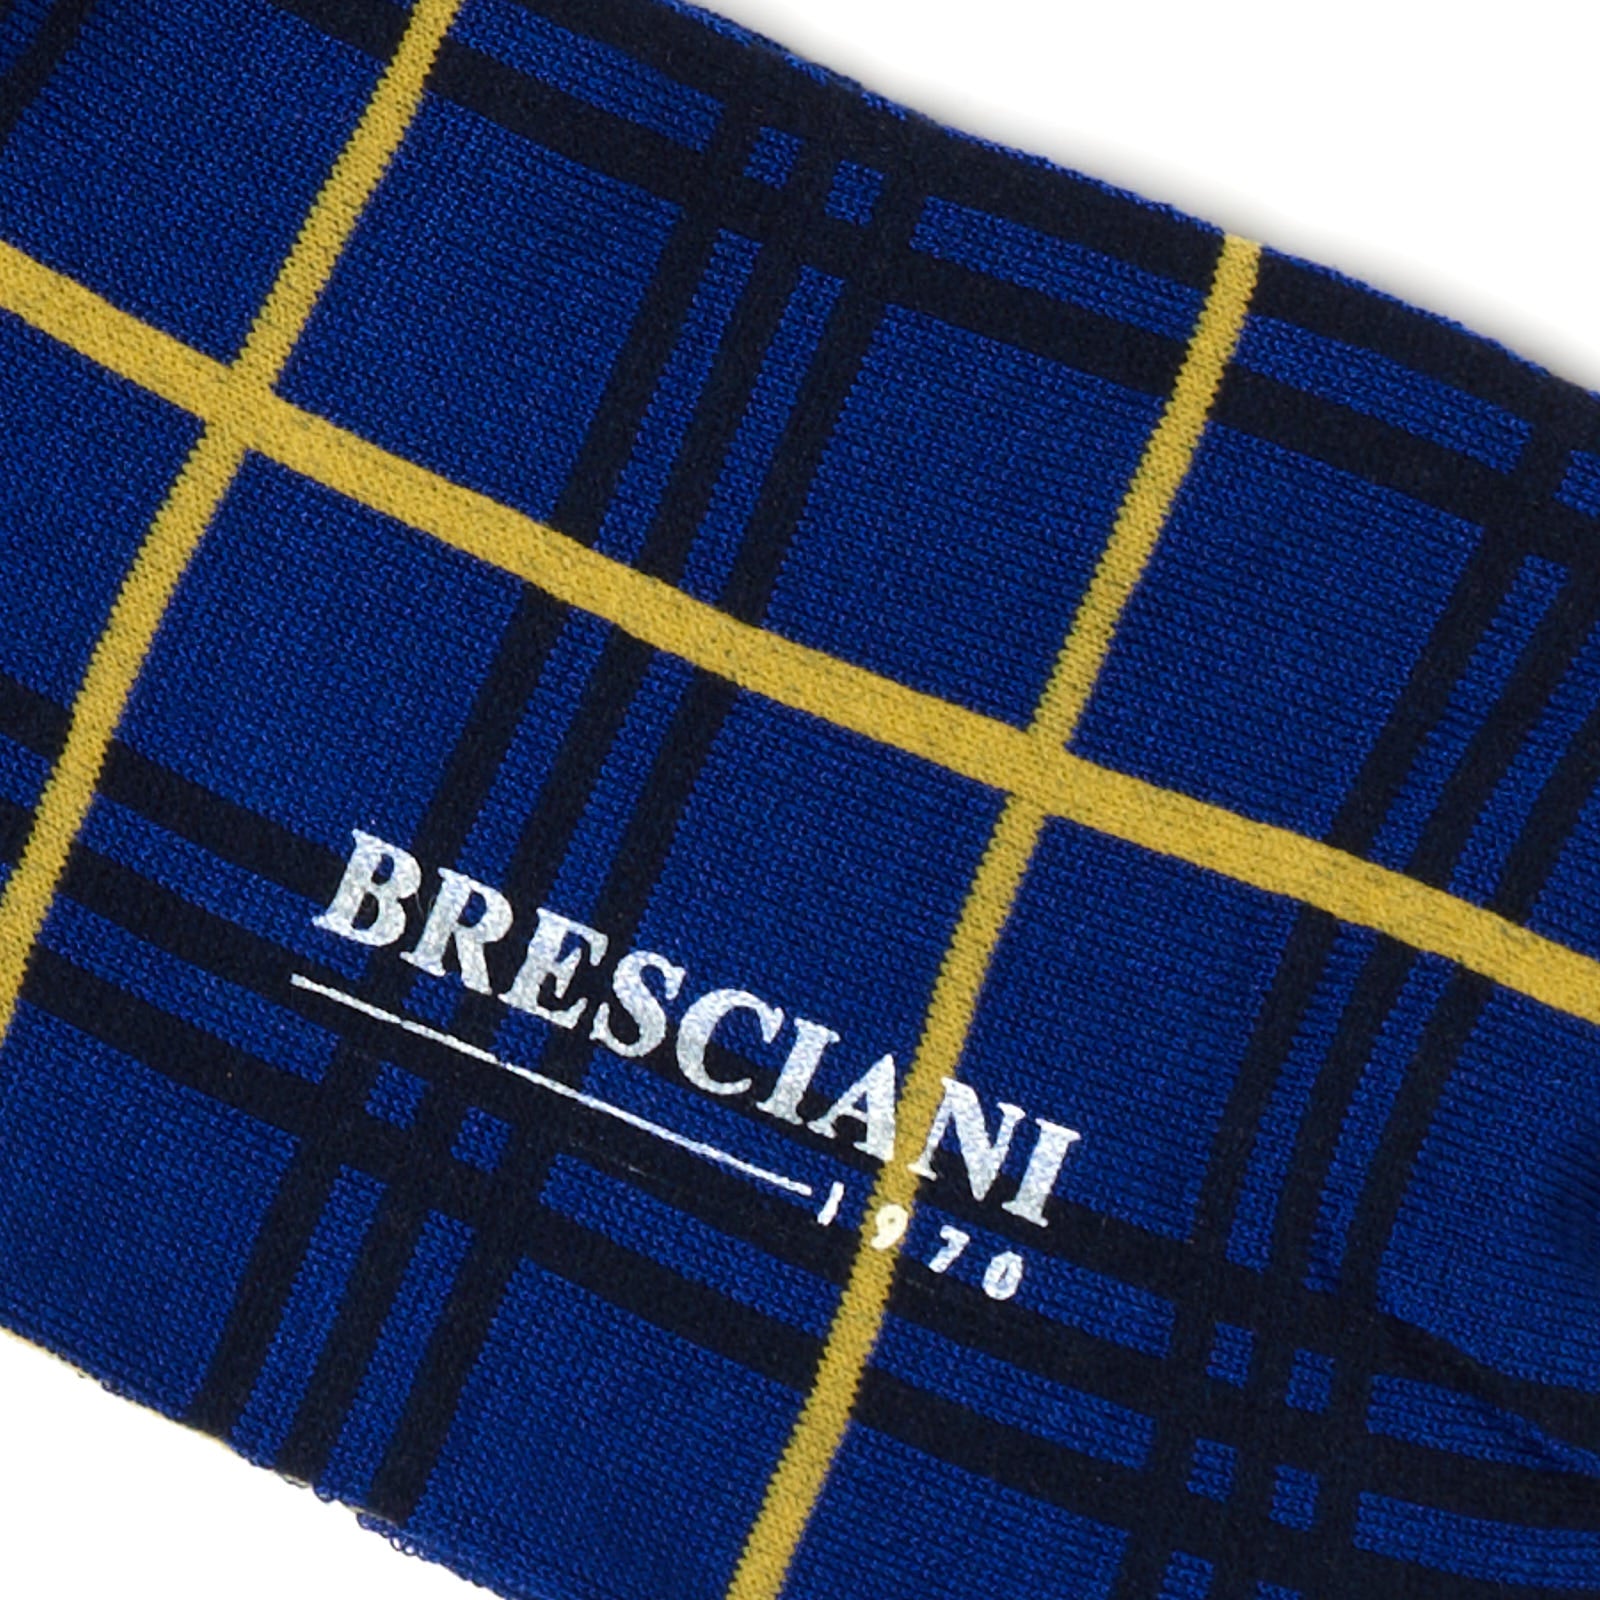 BRESCIANI Cotton Geometry Pattern Design Mid Calf Length Socks US M L